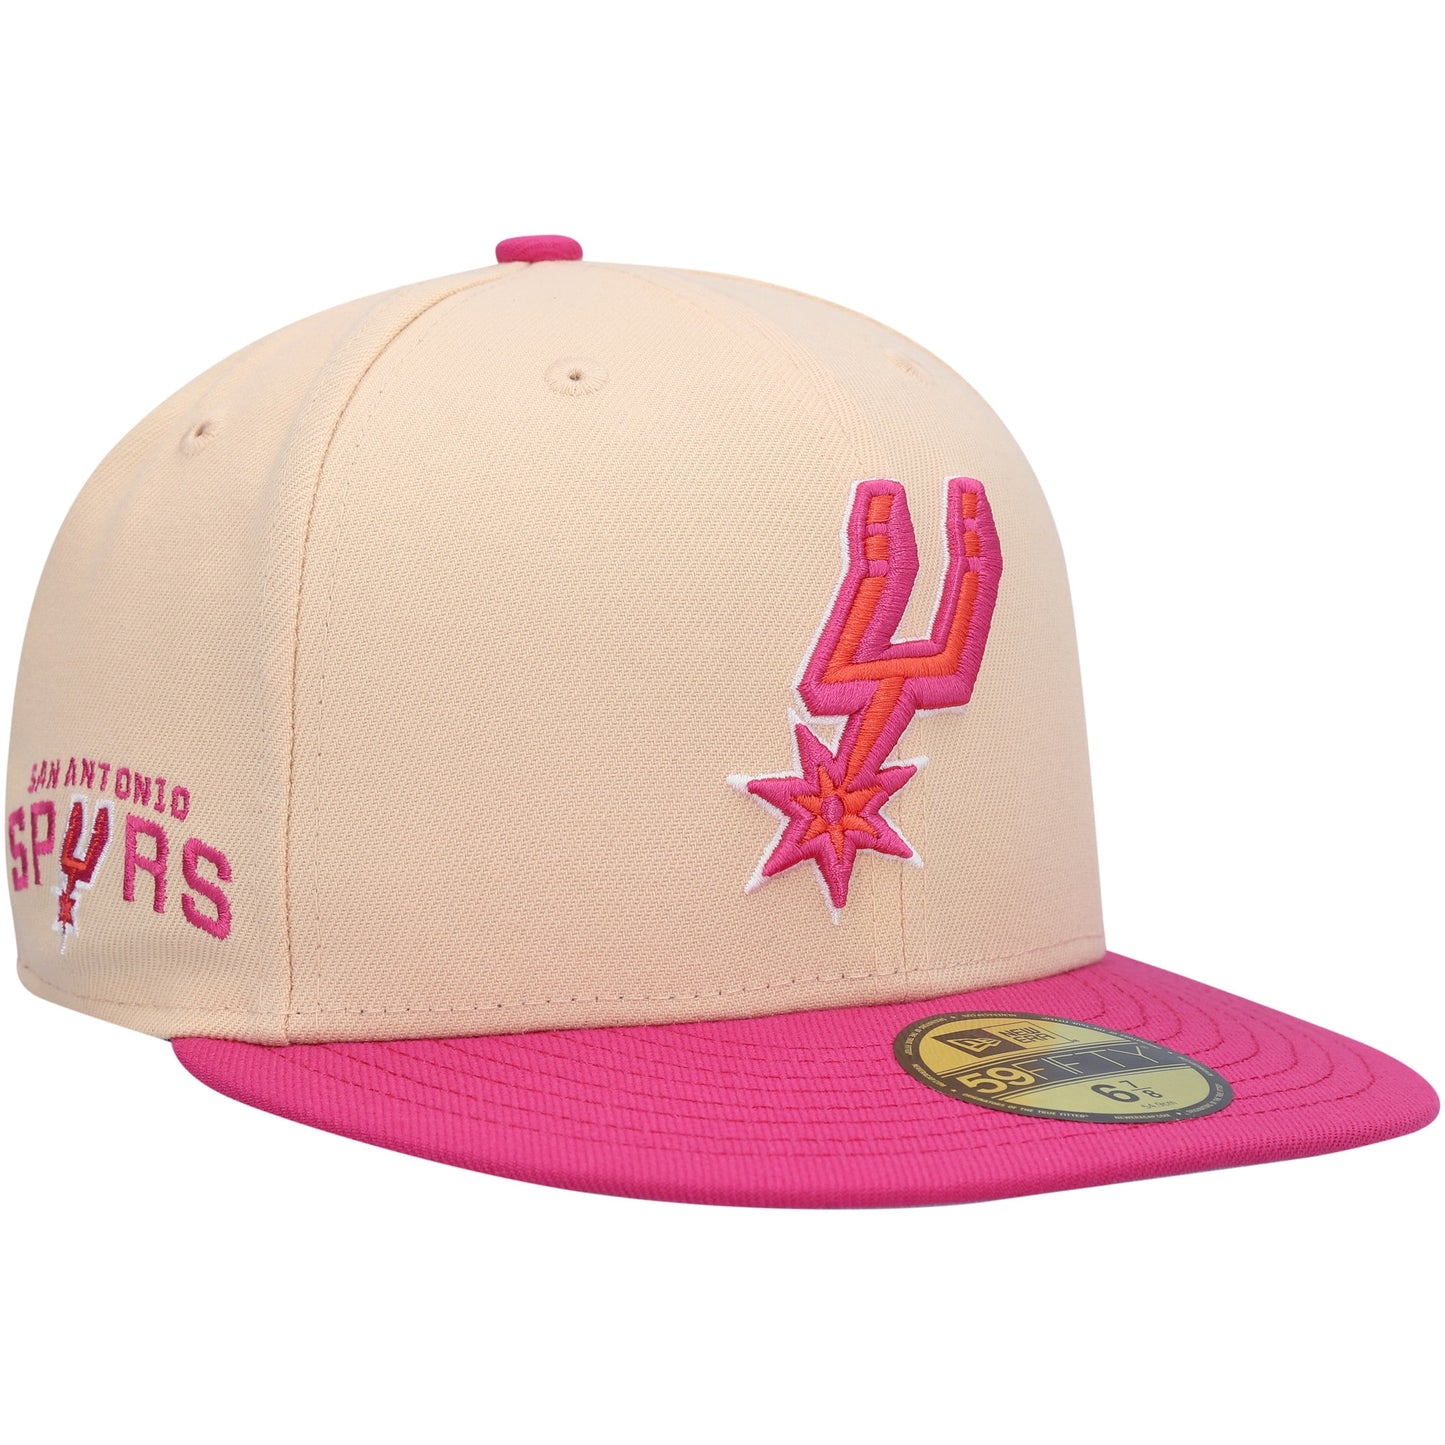 San Antonio Spurs New Era Passion Mango 59FIFTY Fitted Hat - Orange/Pink